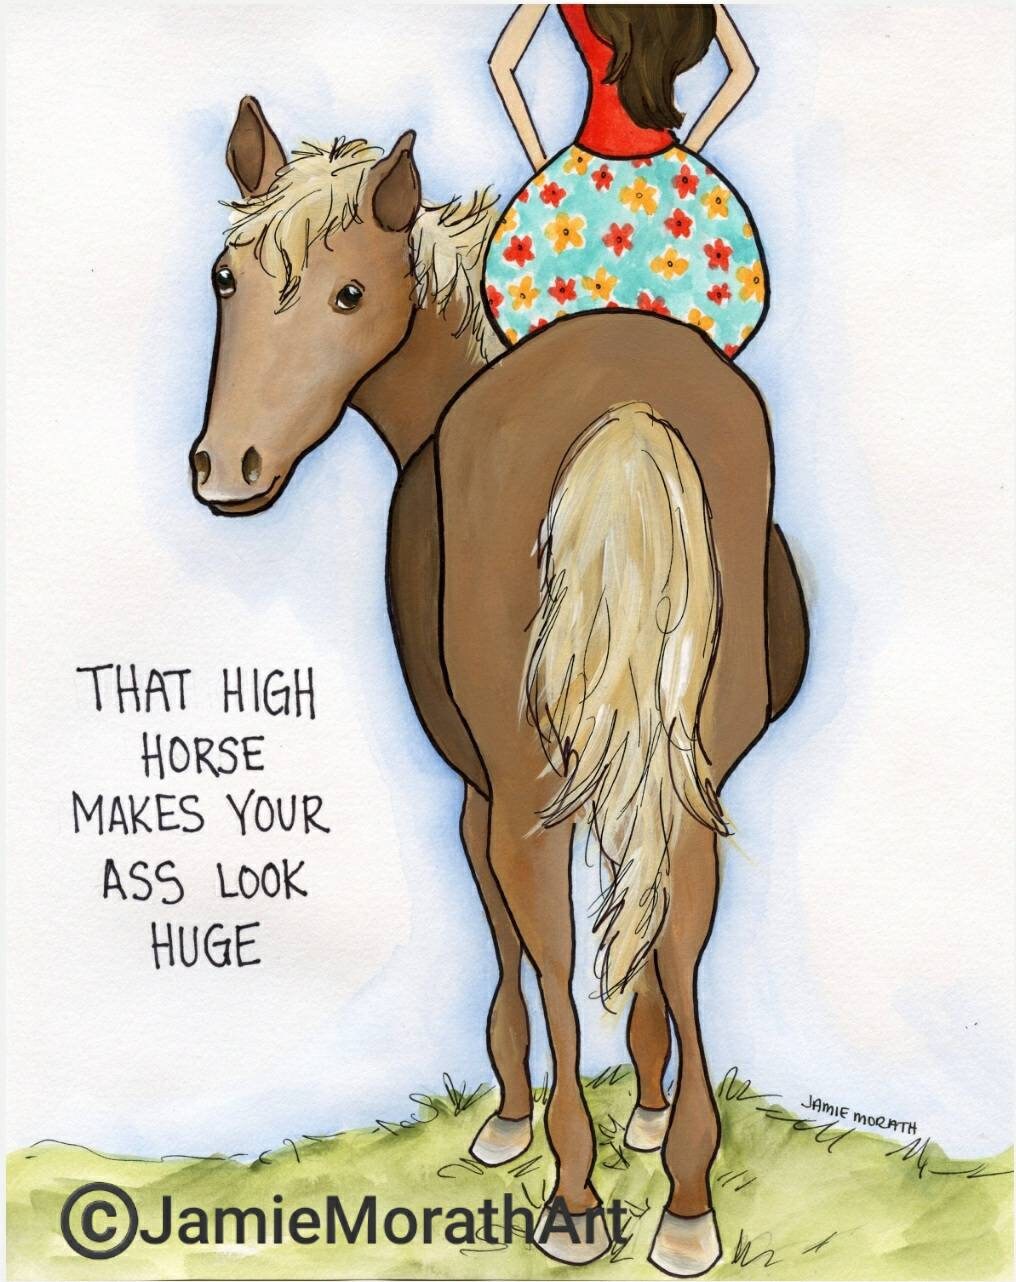 High Horse, art print